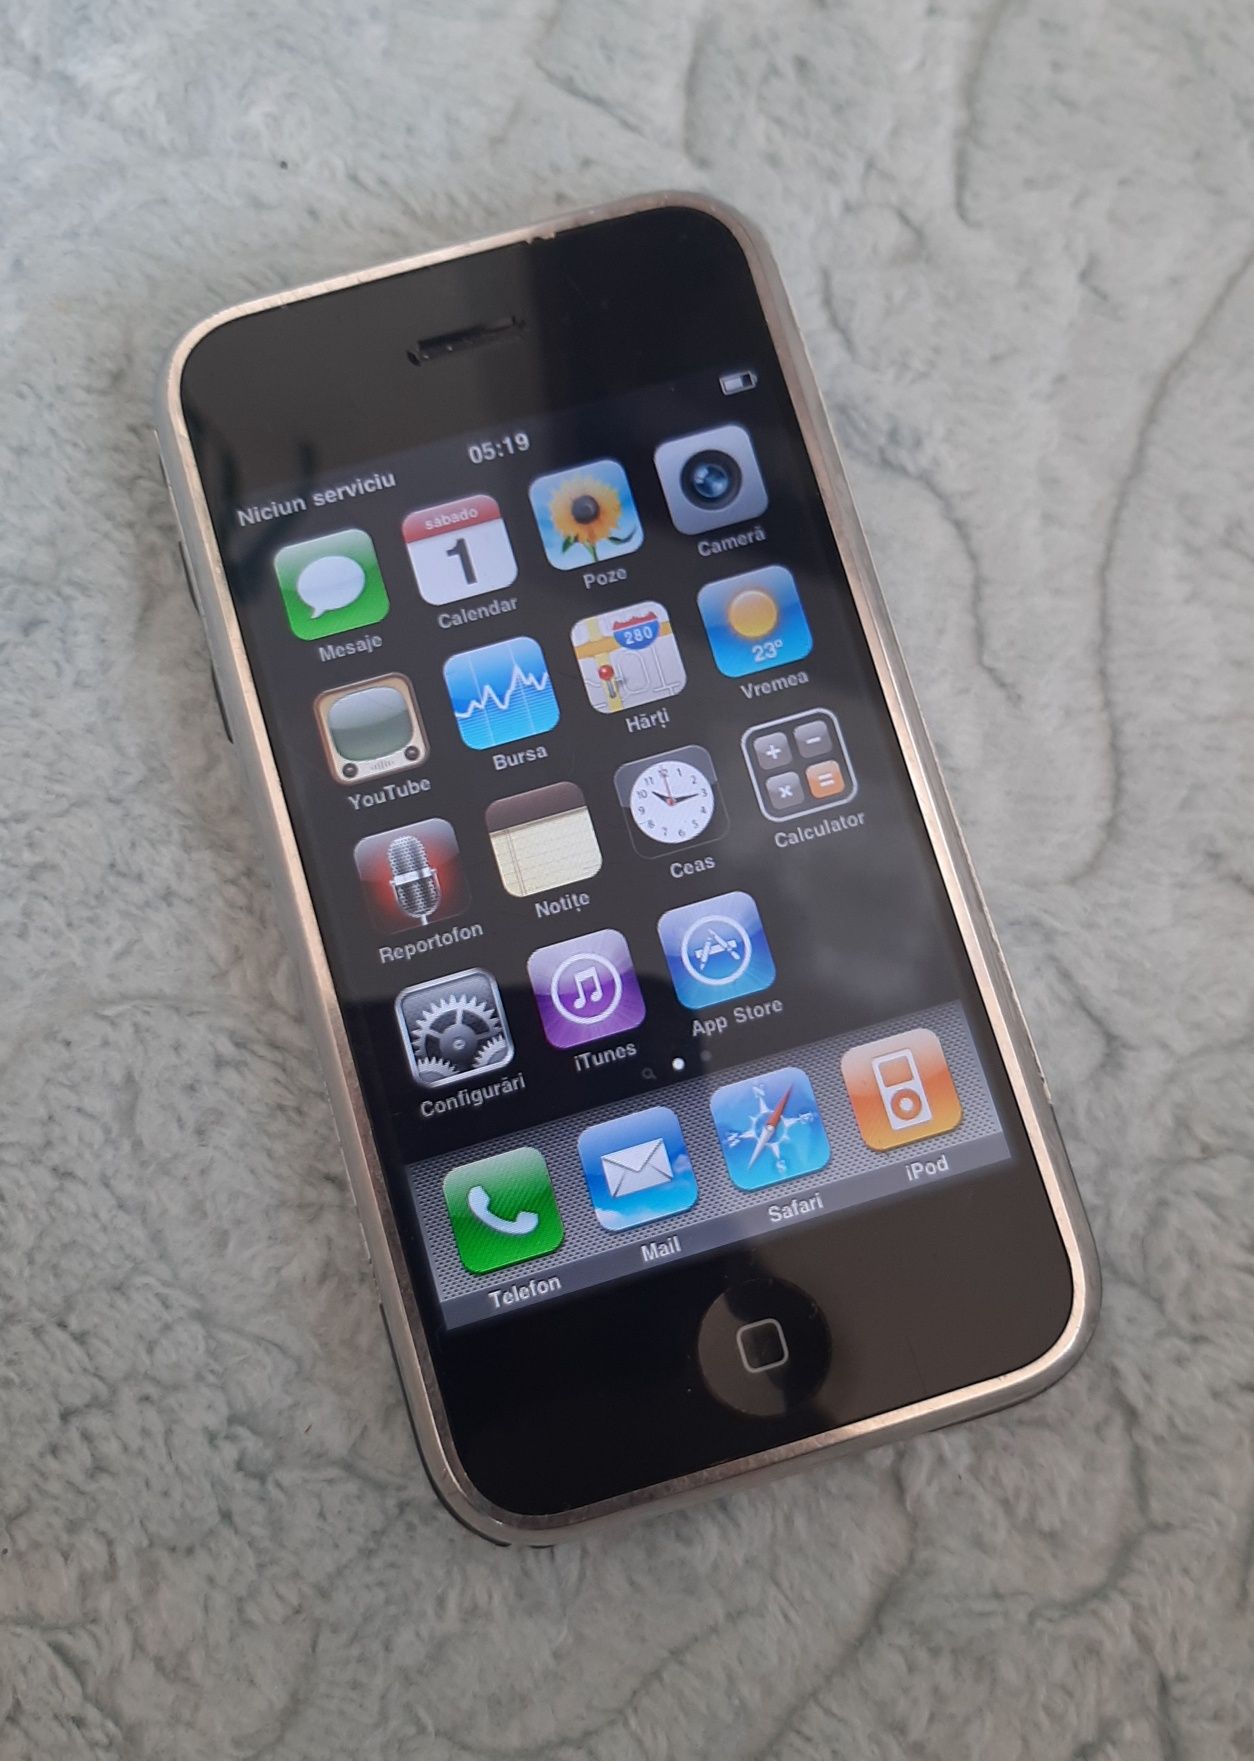 IPHONE 1st Generation 2G model Apple A1203